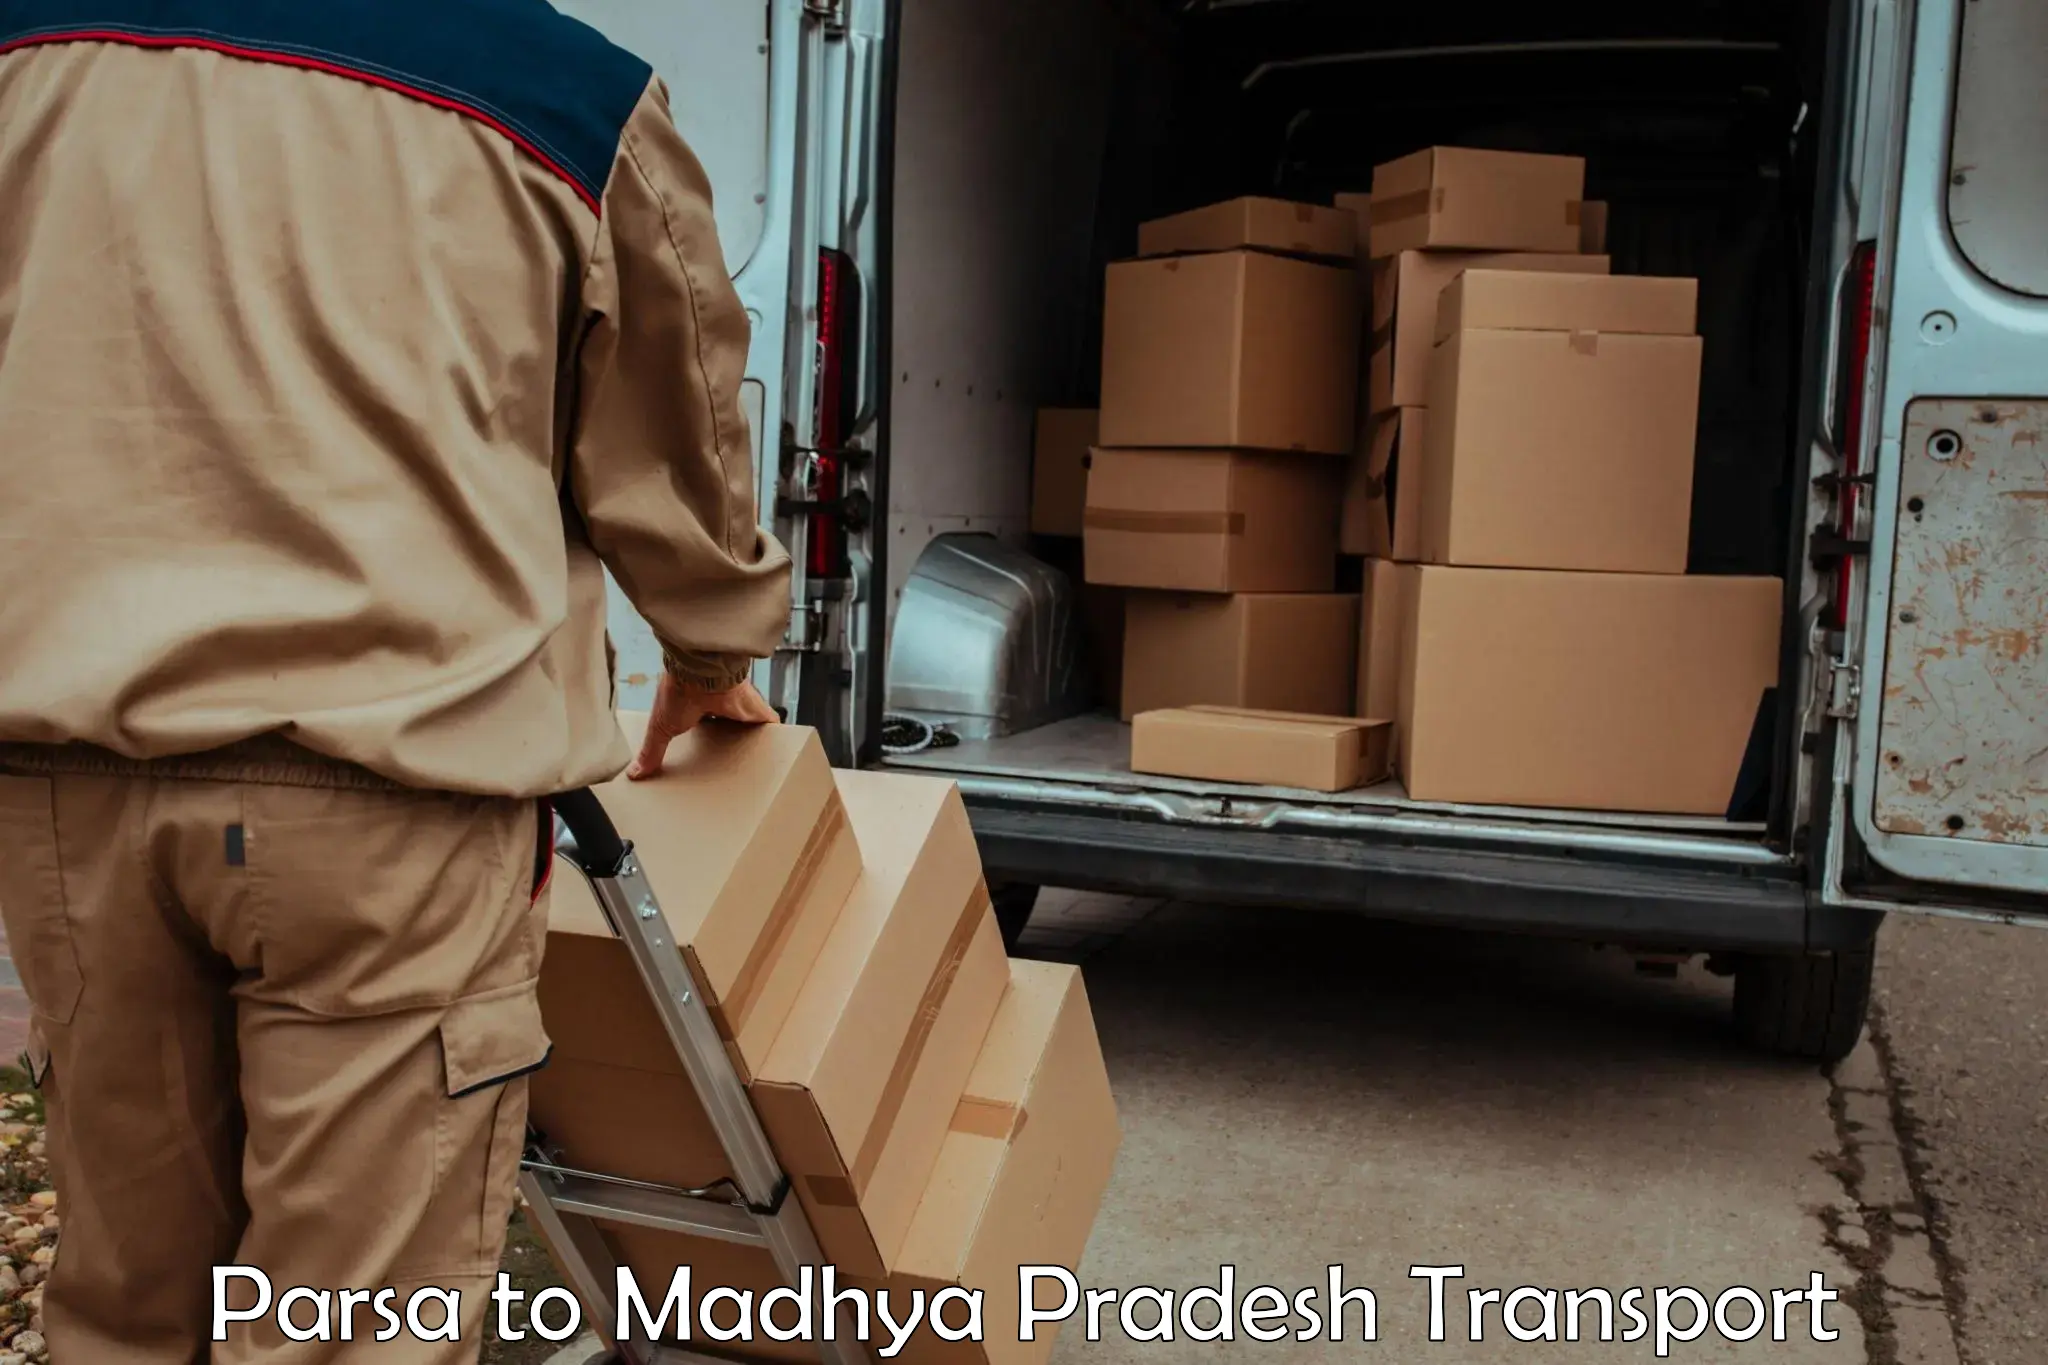 Truck transport companies in India Parsa to Madhya Pradesh